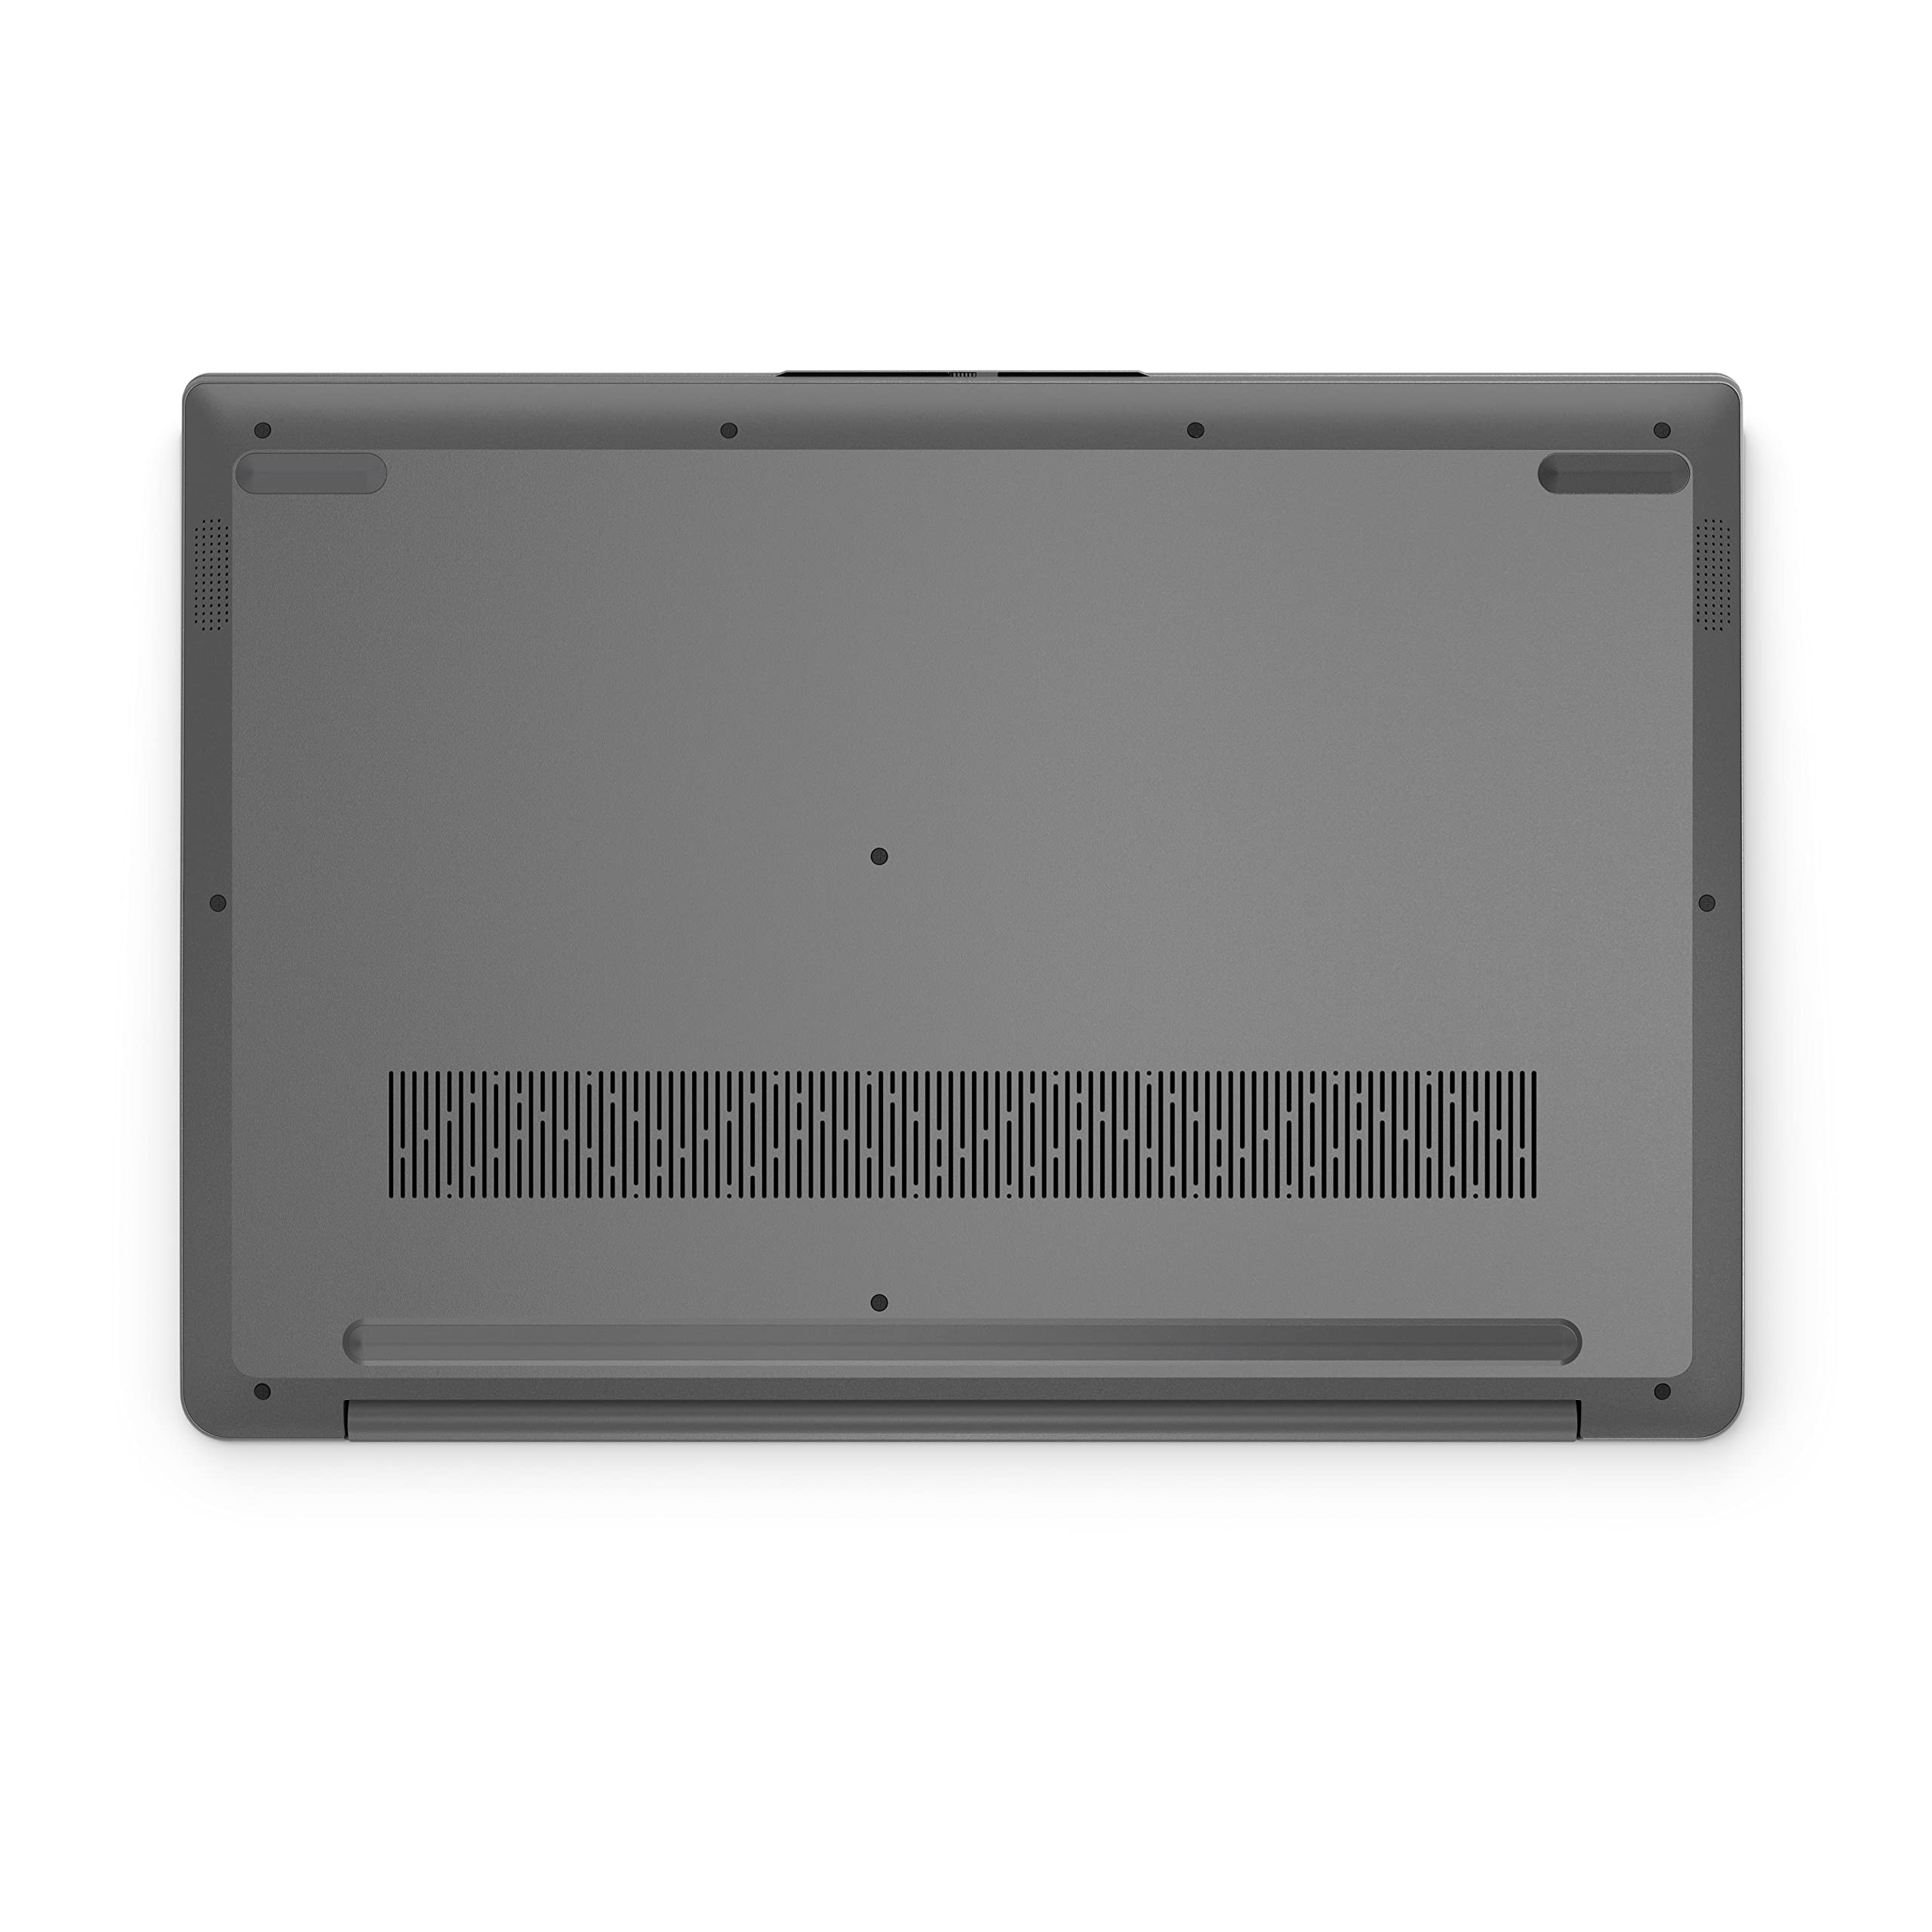 Lenovo - 2022 - IdeaPad 3 - Travel Laptop Computer - AMD Ryzen 5 - 17.3